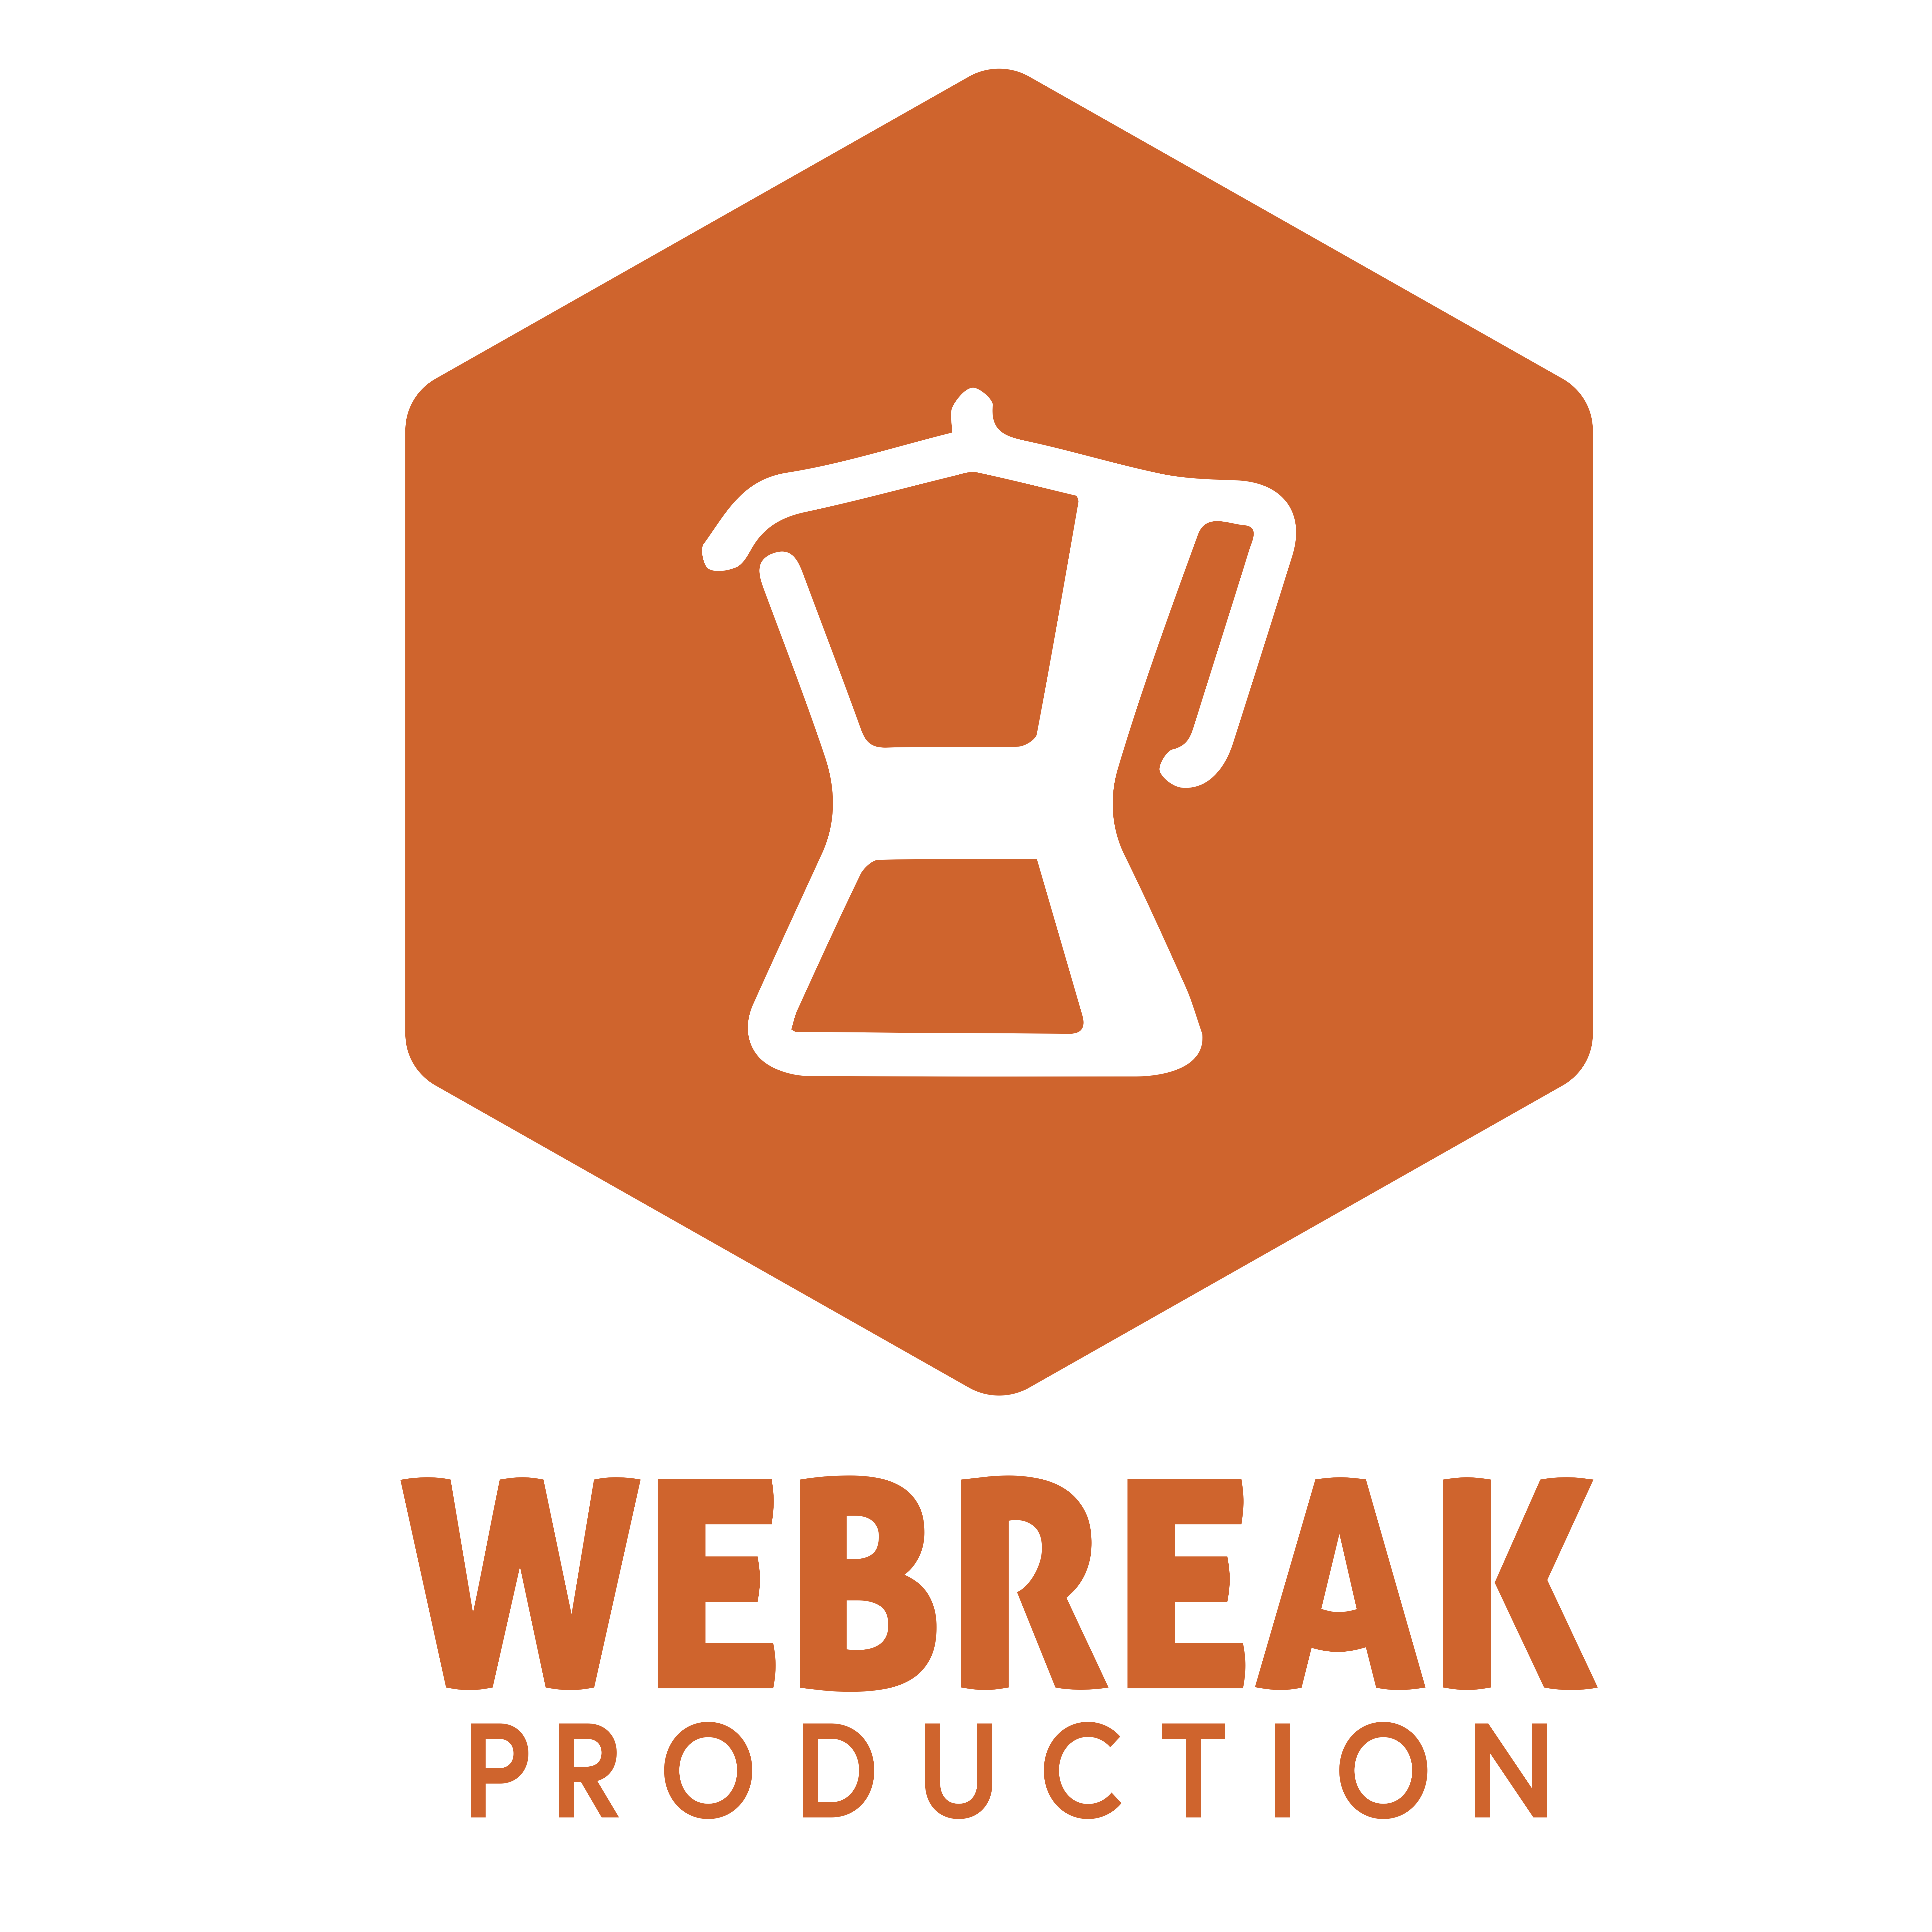 Webreak Production logo